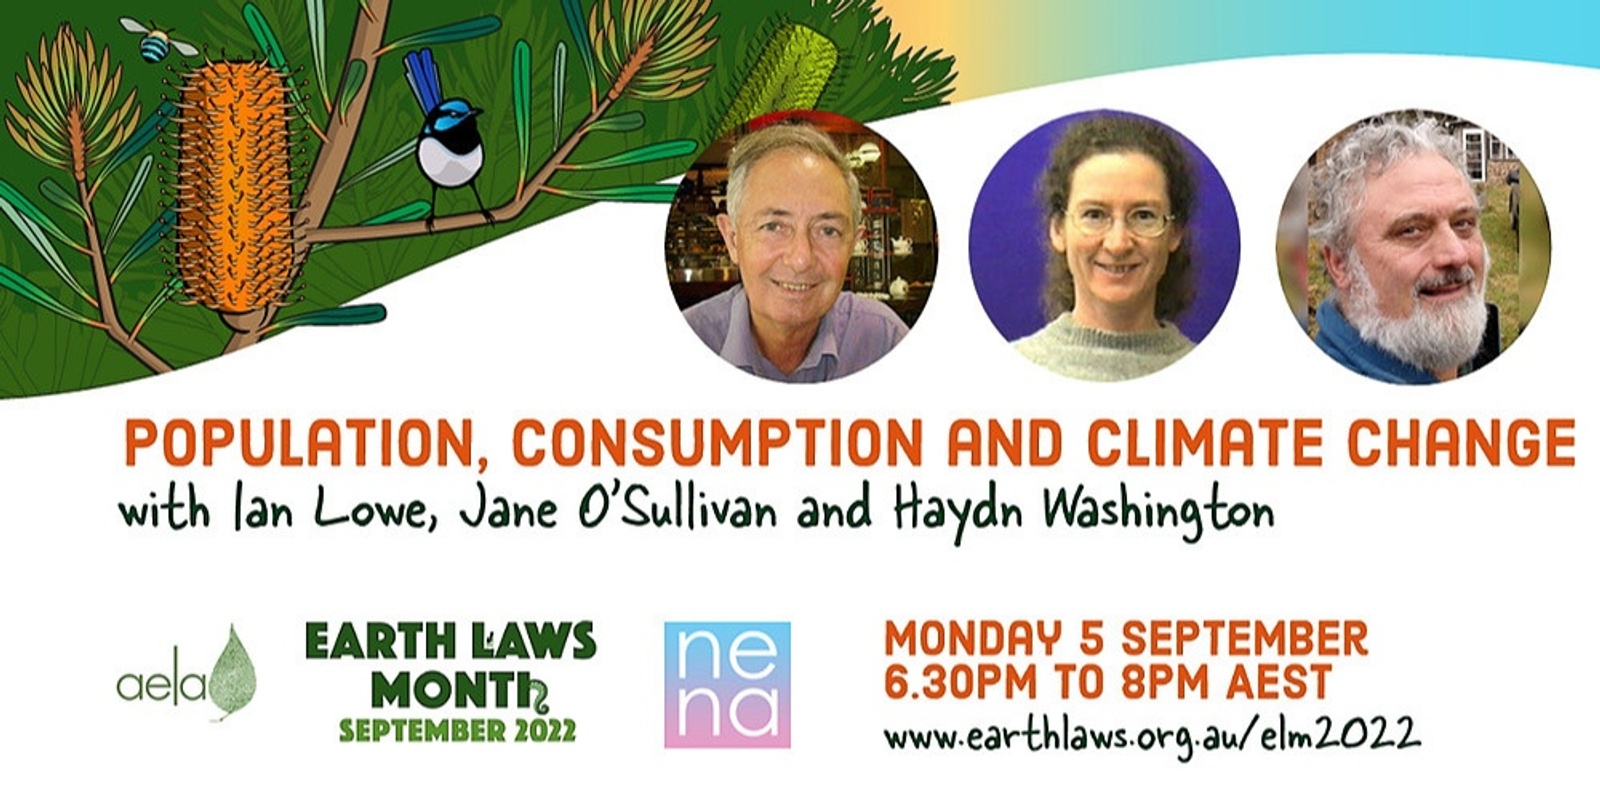 Population, Consumption & Climate Change with Ian Lowe, Jane O'Sullivan and Haydn Washington